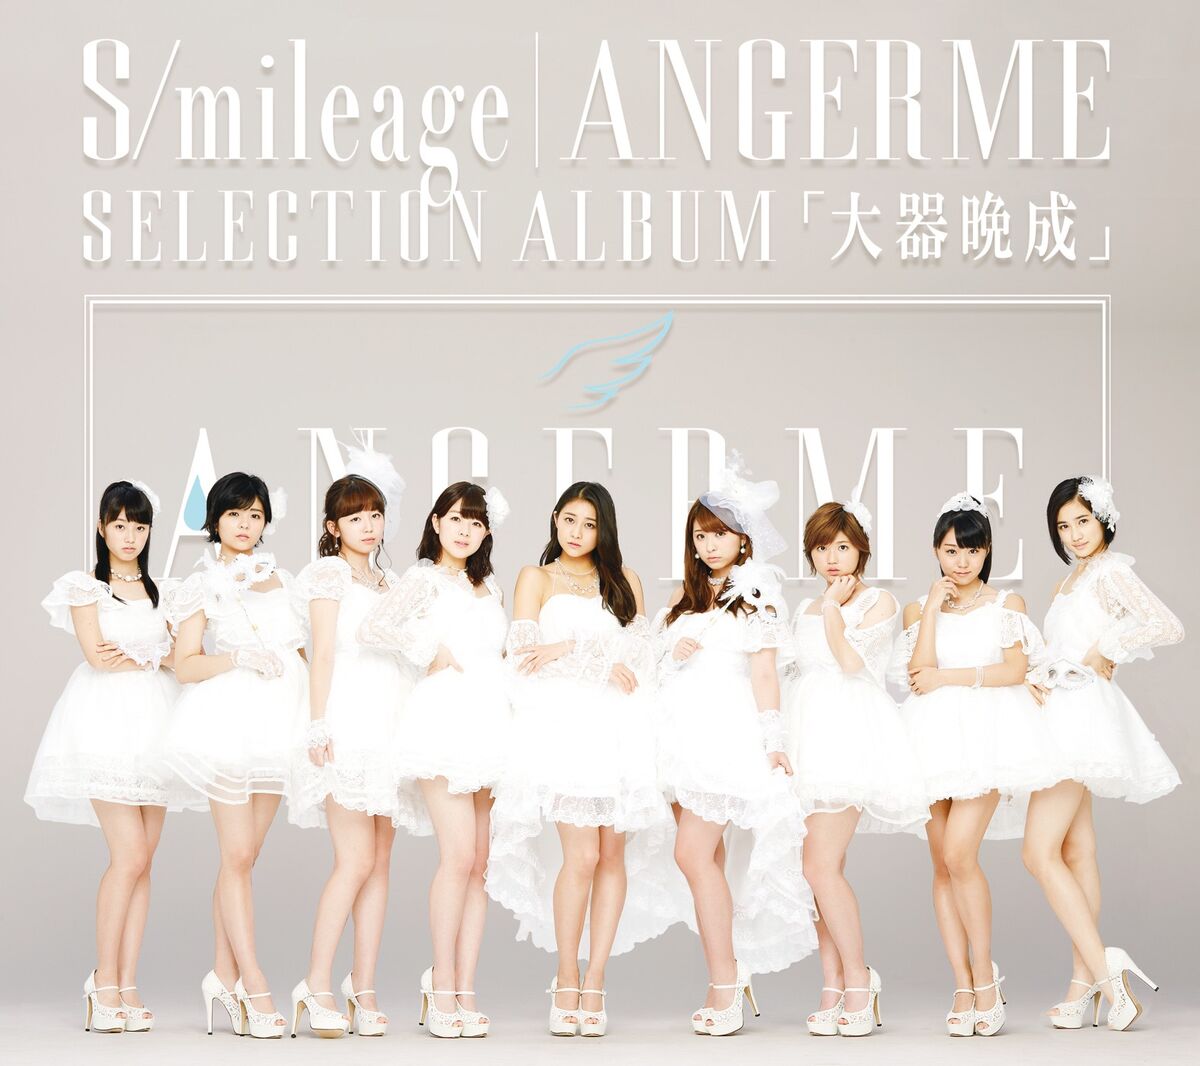 S/mileage / ANGERME SELECTION ALBUM「大器晩成」 | ハロー!プロジェクト Wiki | Fandom